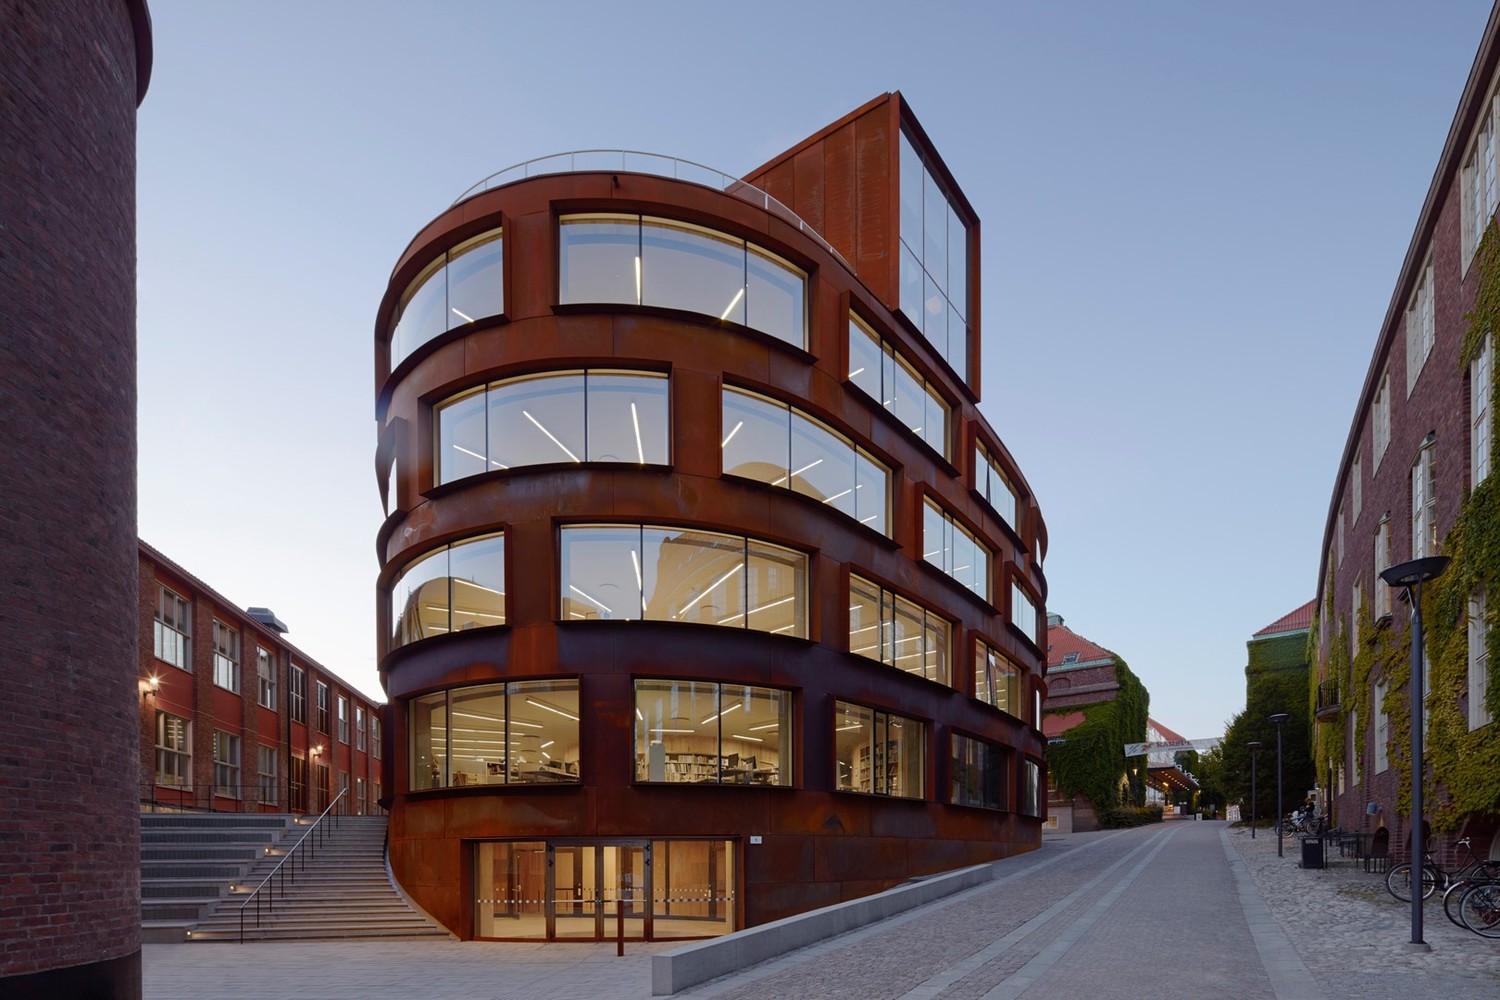 Arquitectura educacional: Escuela de Arquitectura en el Royal Institute of Technology